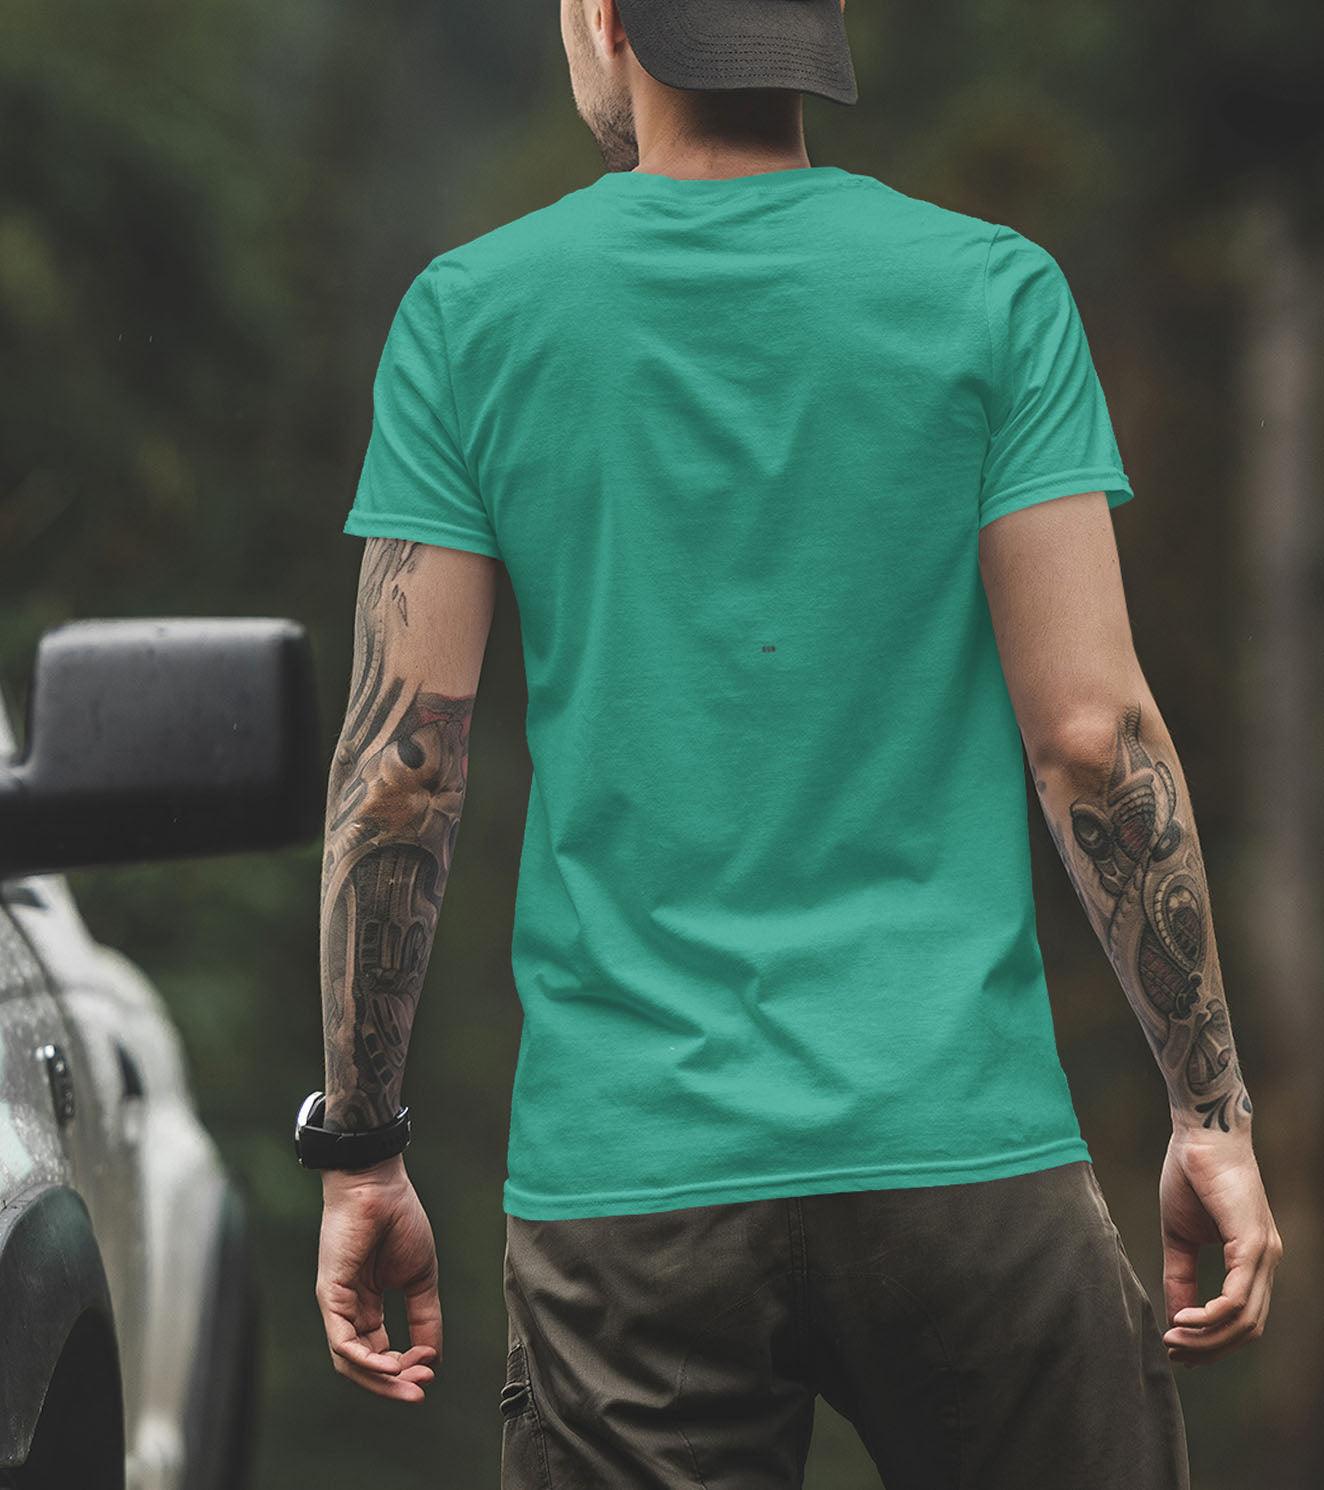 Men's Scaling is Cool T-shirt ( ocean Green ) - wodarmour